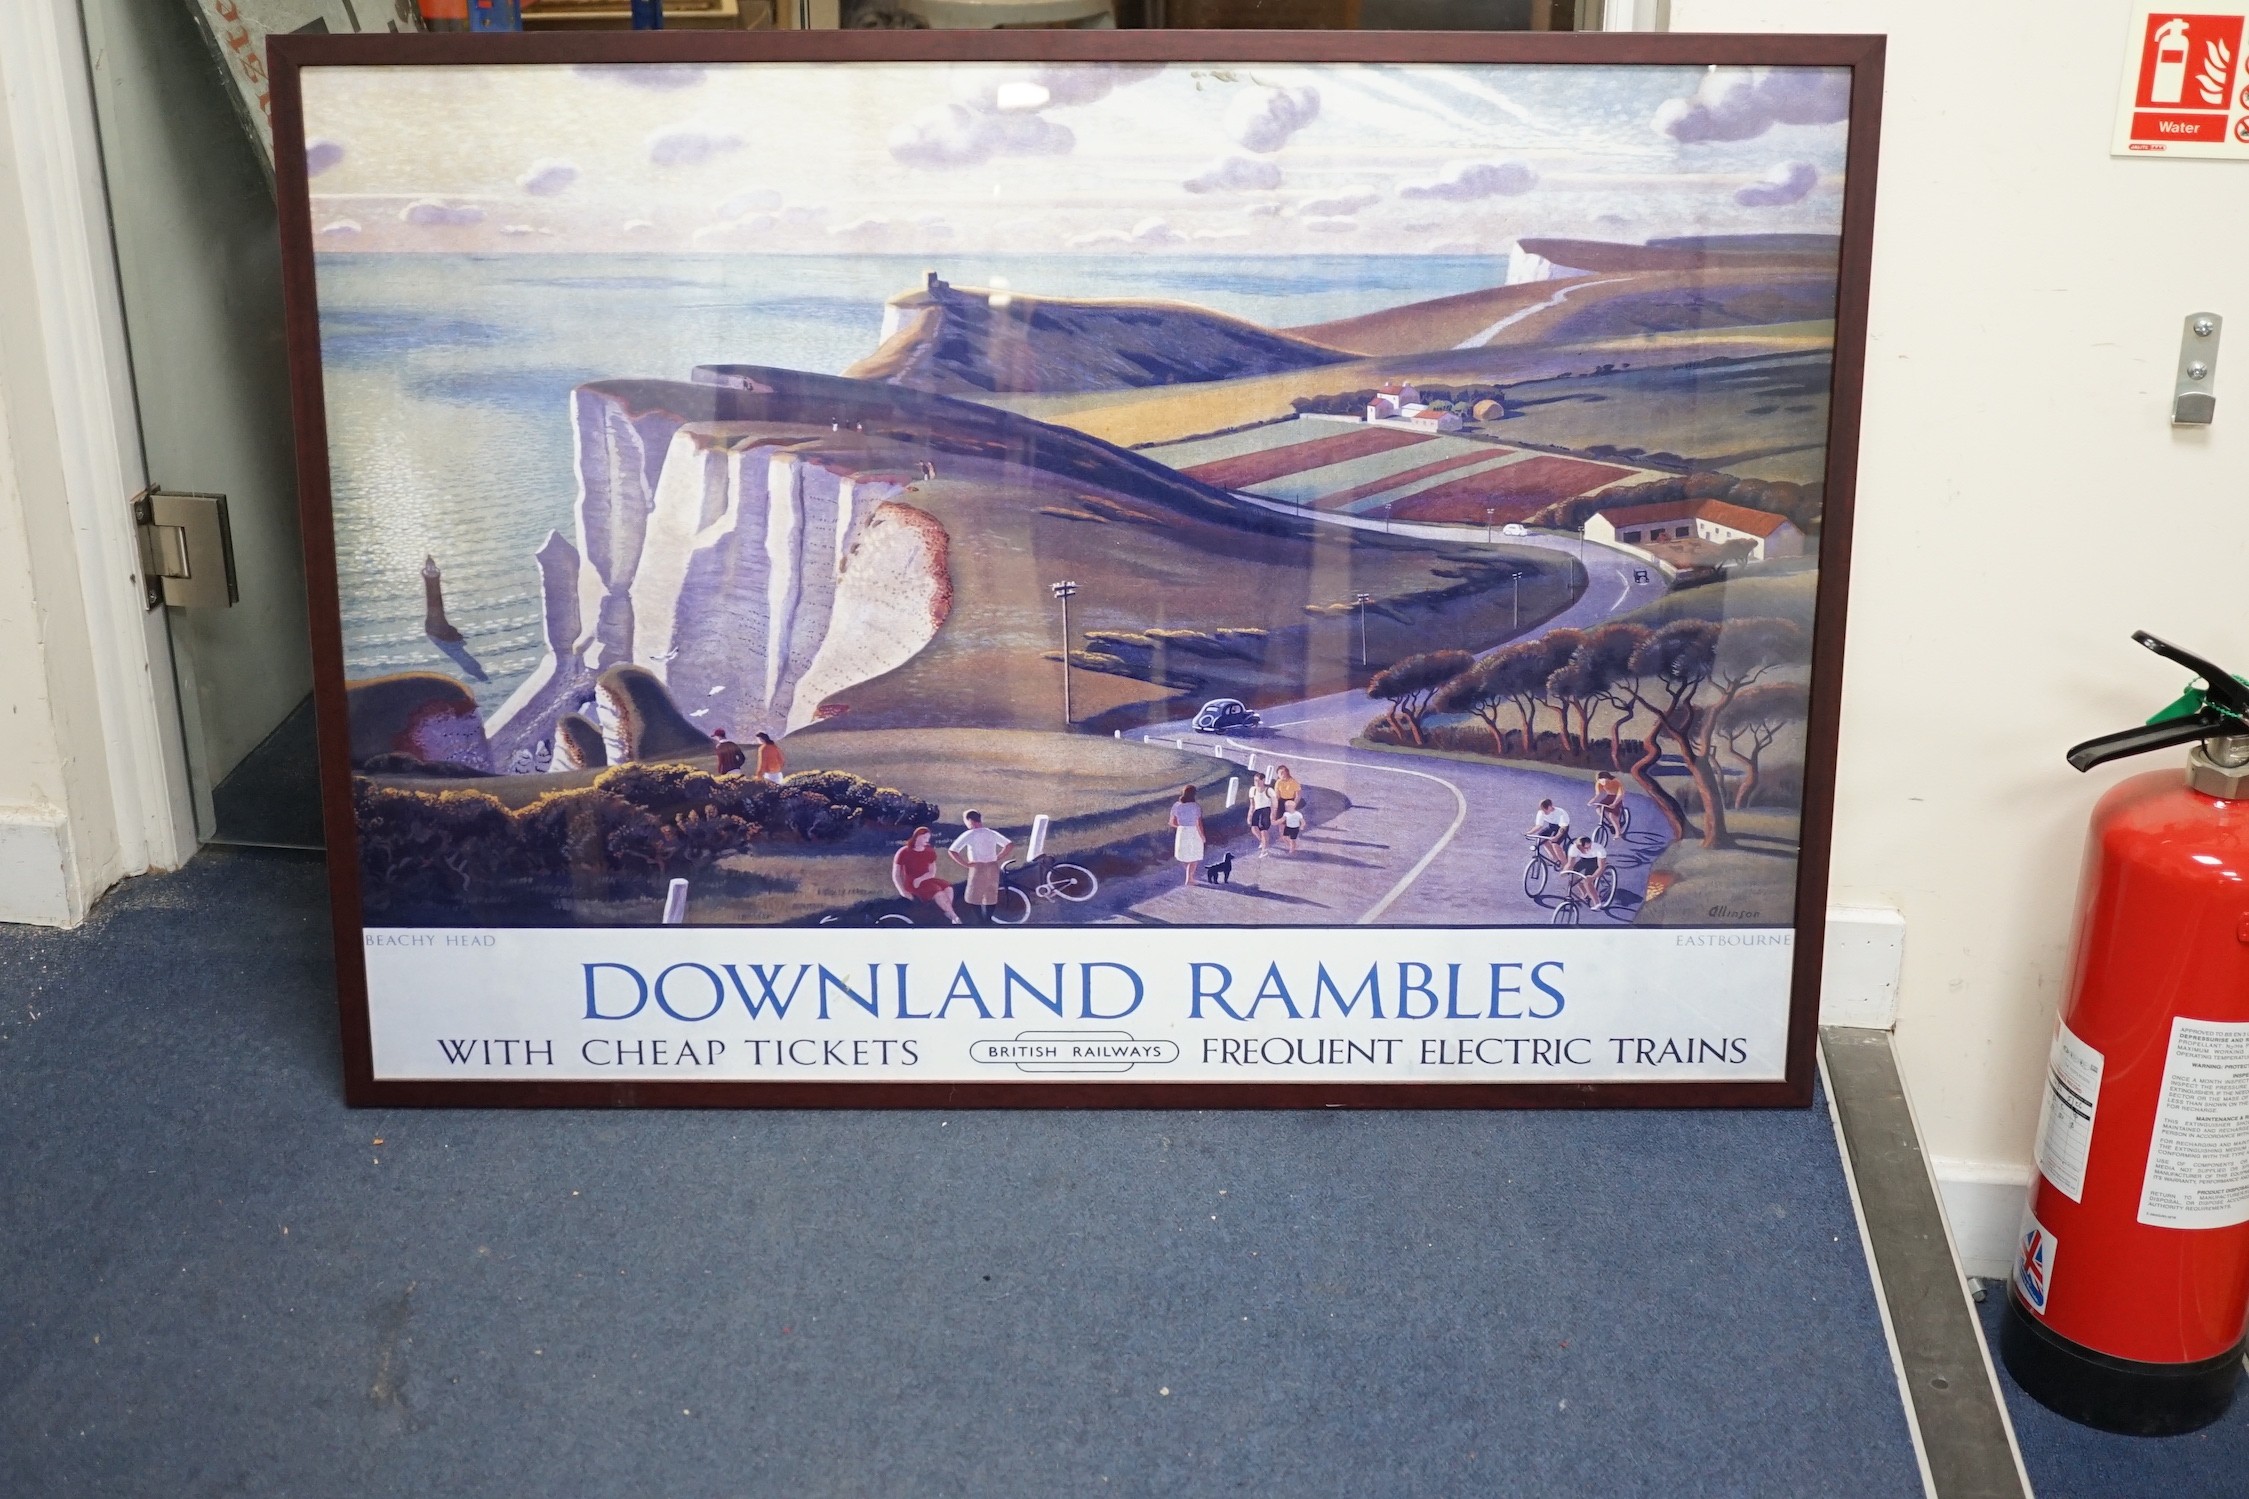 After Adrian Allinson, colour print, British Railways poster for Downland Rambles, Beachy Head / Eastbourne, 69 x 99cm